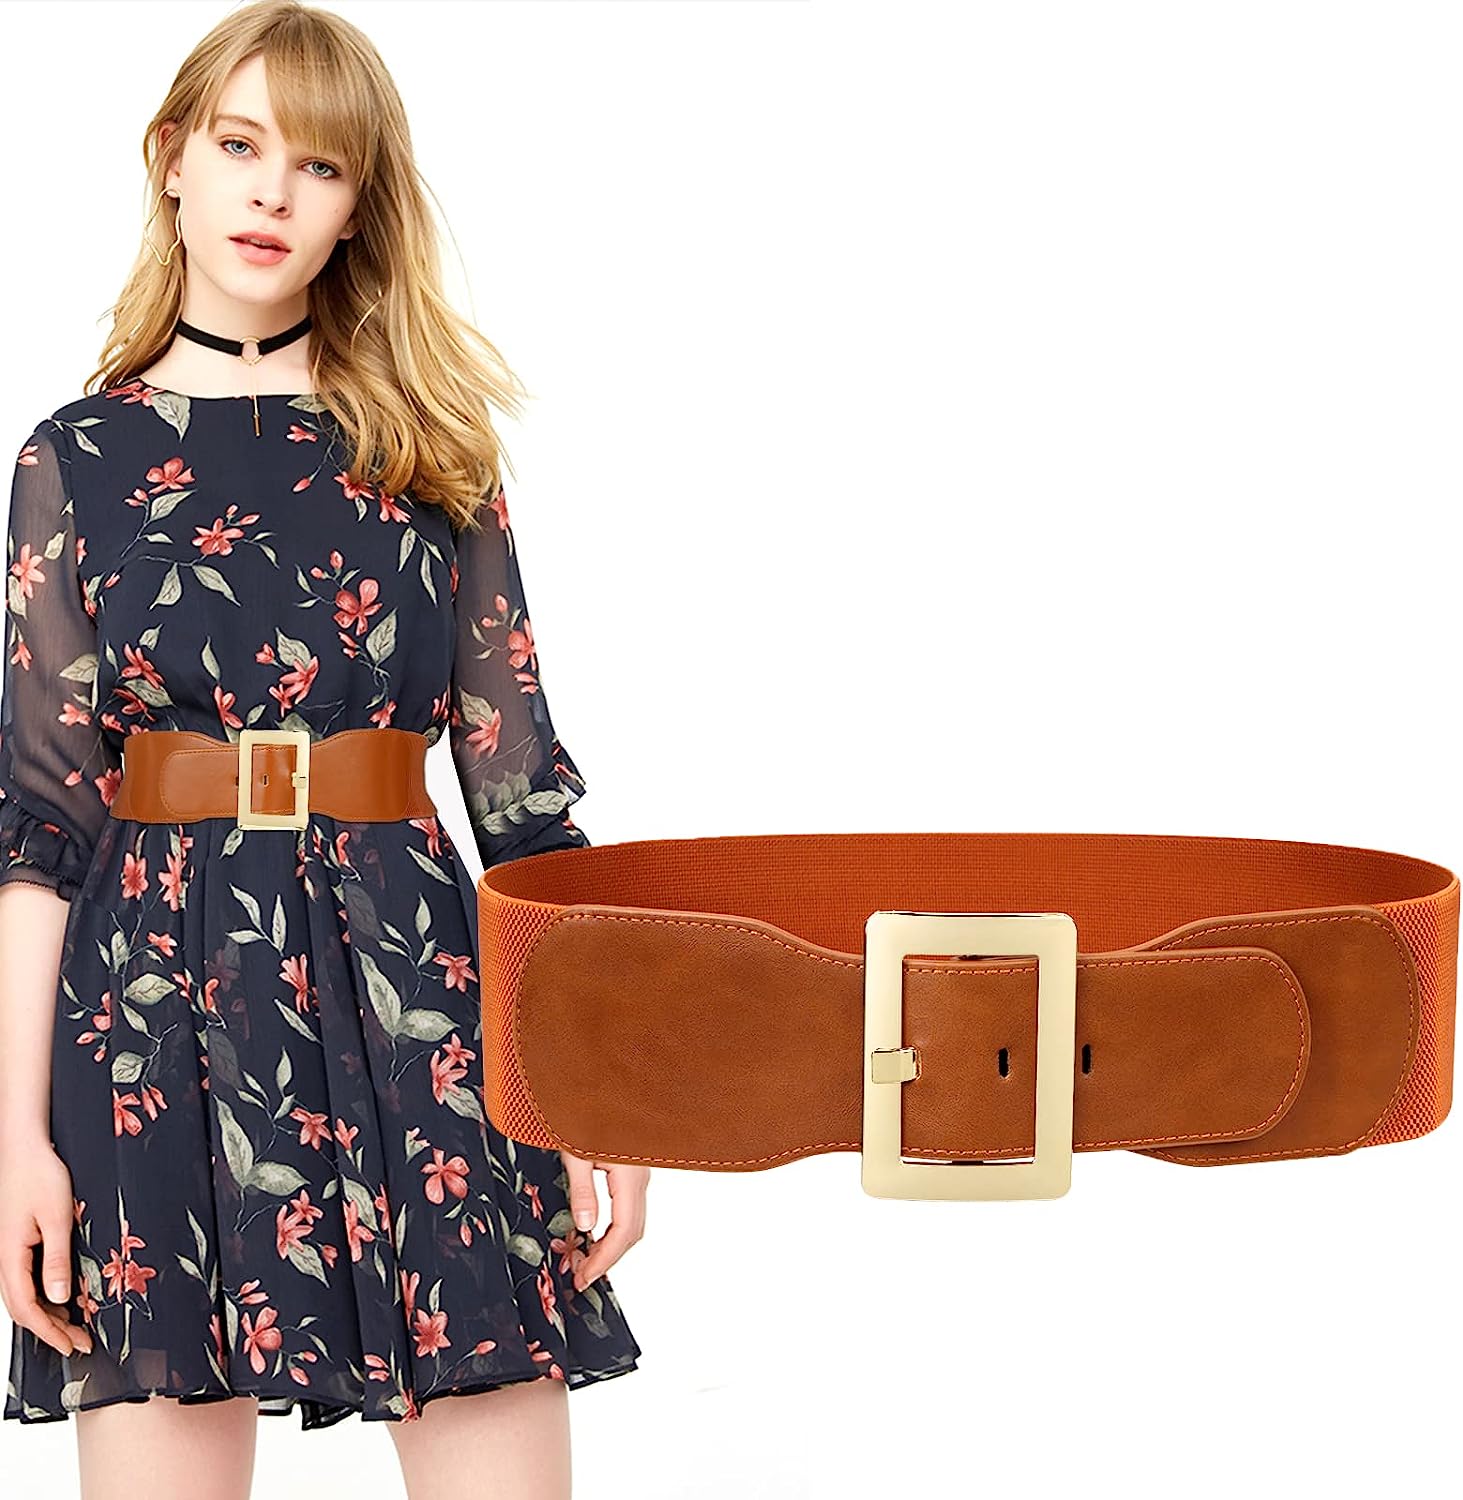 SUOSDEY Wide Elastic Belt for Women, Stretch Cinch Waist Belt for Ladies Dresses with Metal Buckle